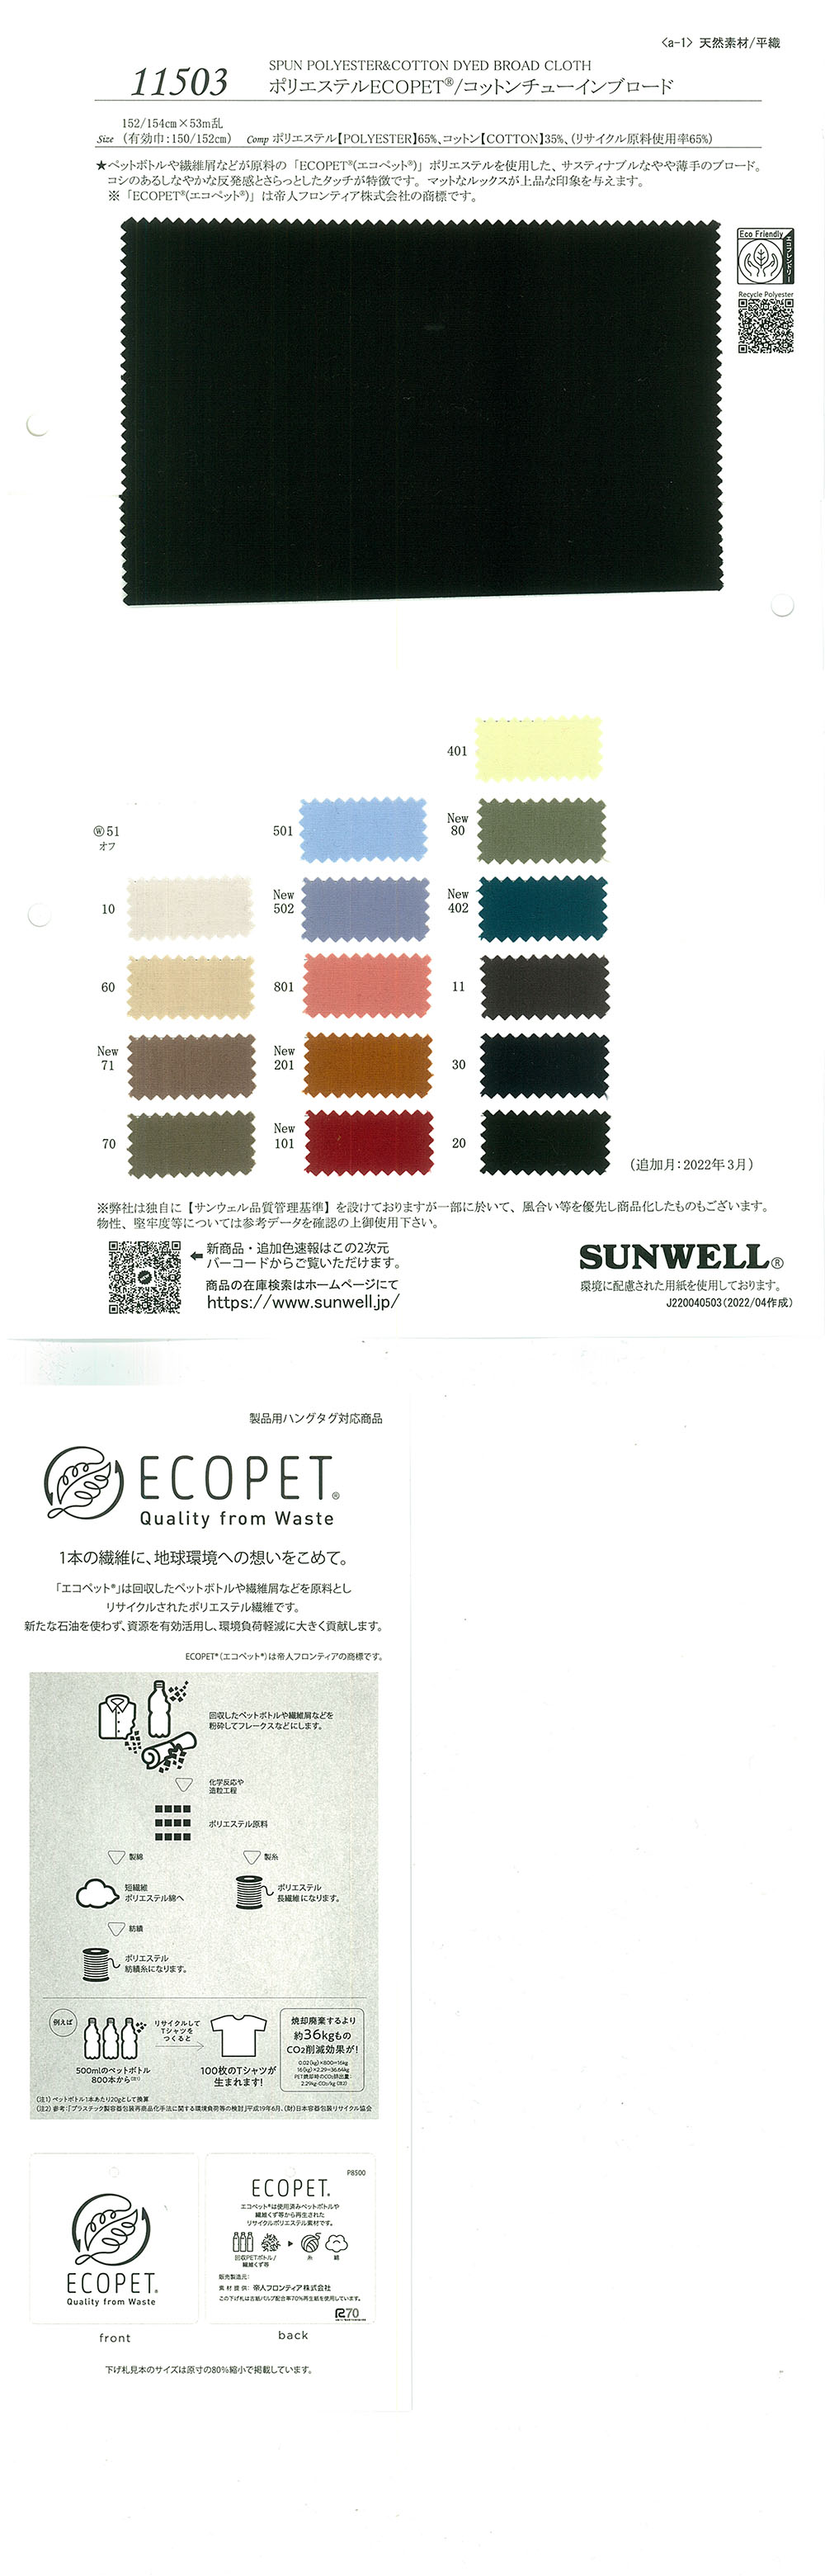 11503 Poliéster ECOPET(R)/algodão Tuin Broadcloth[Têxtil / Tecido] SUNWELL